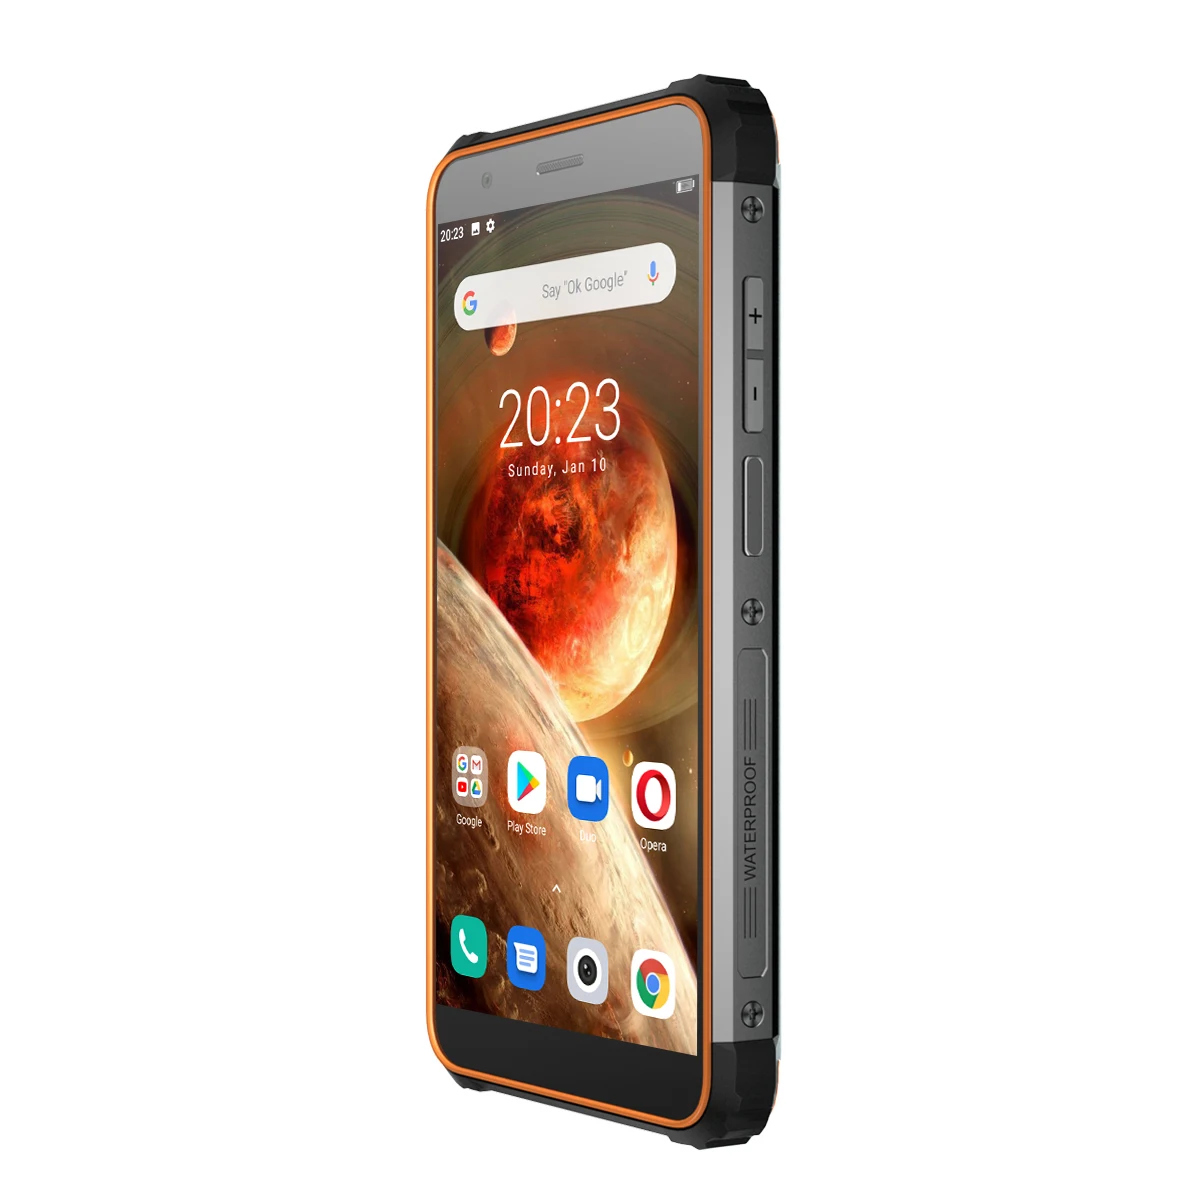 slimmest mobile phone Android earn money online by mobile phones for Blackview BV6600